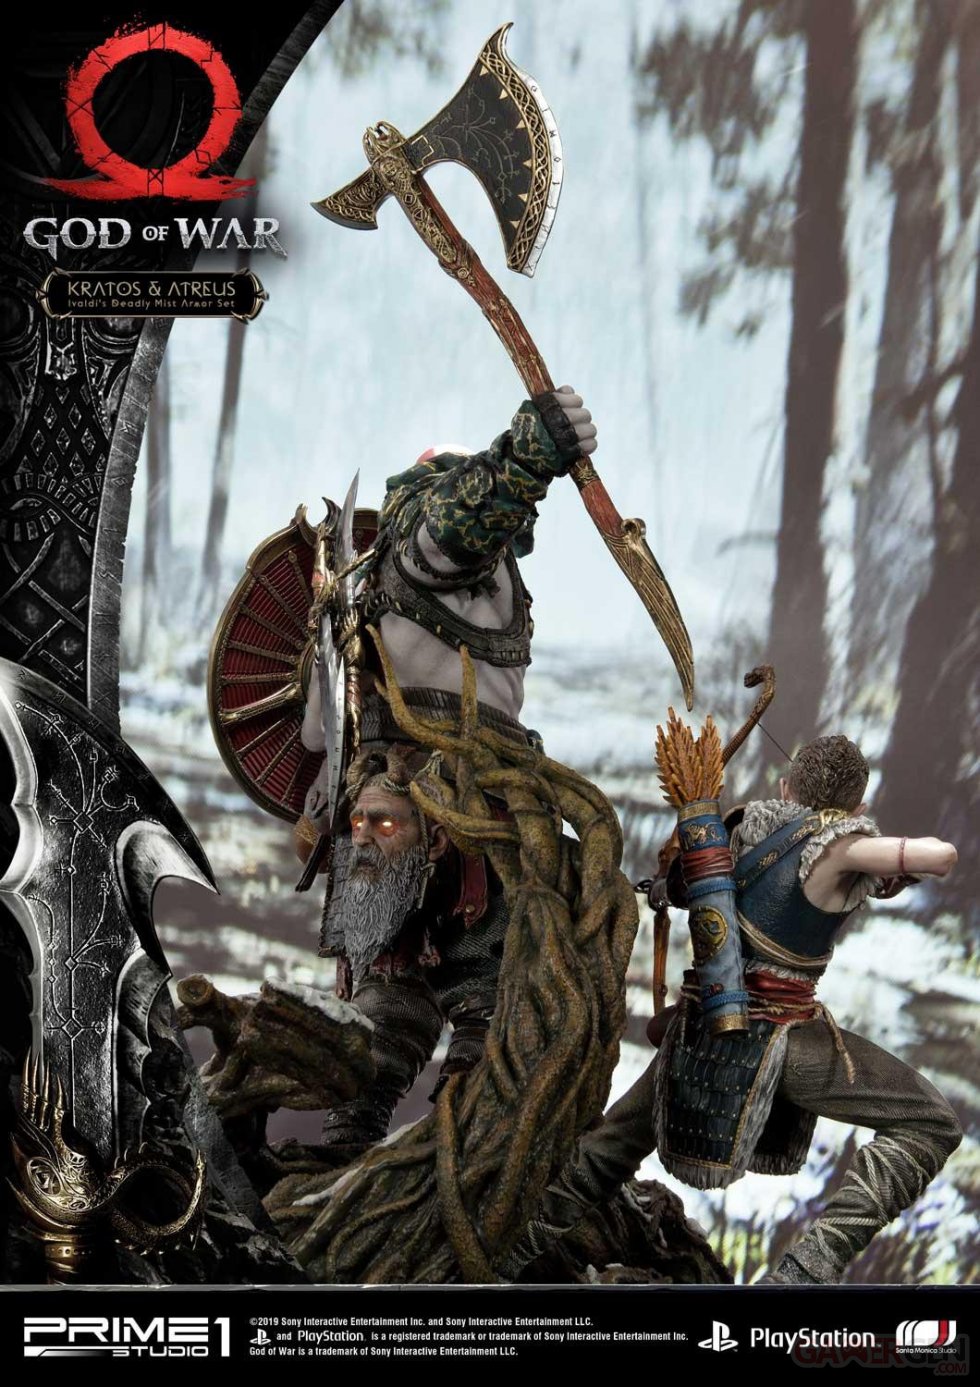 God-of-War-figurine-statuette-Prime-1-Studio-Kratos-Atreus-13-17-11-2019